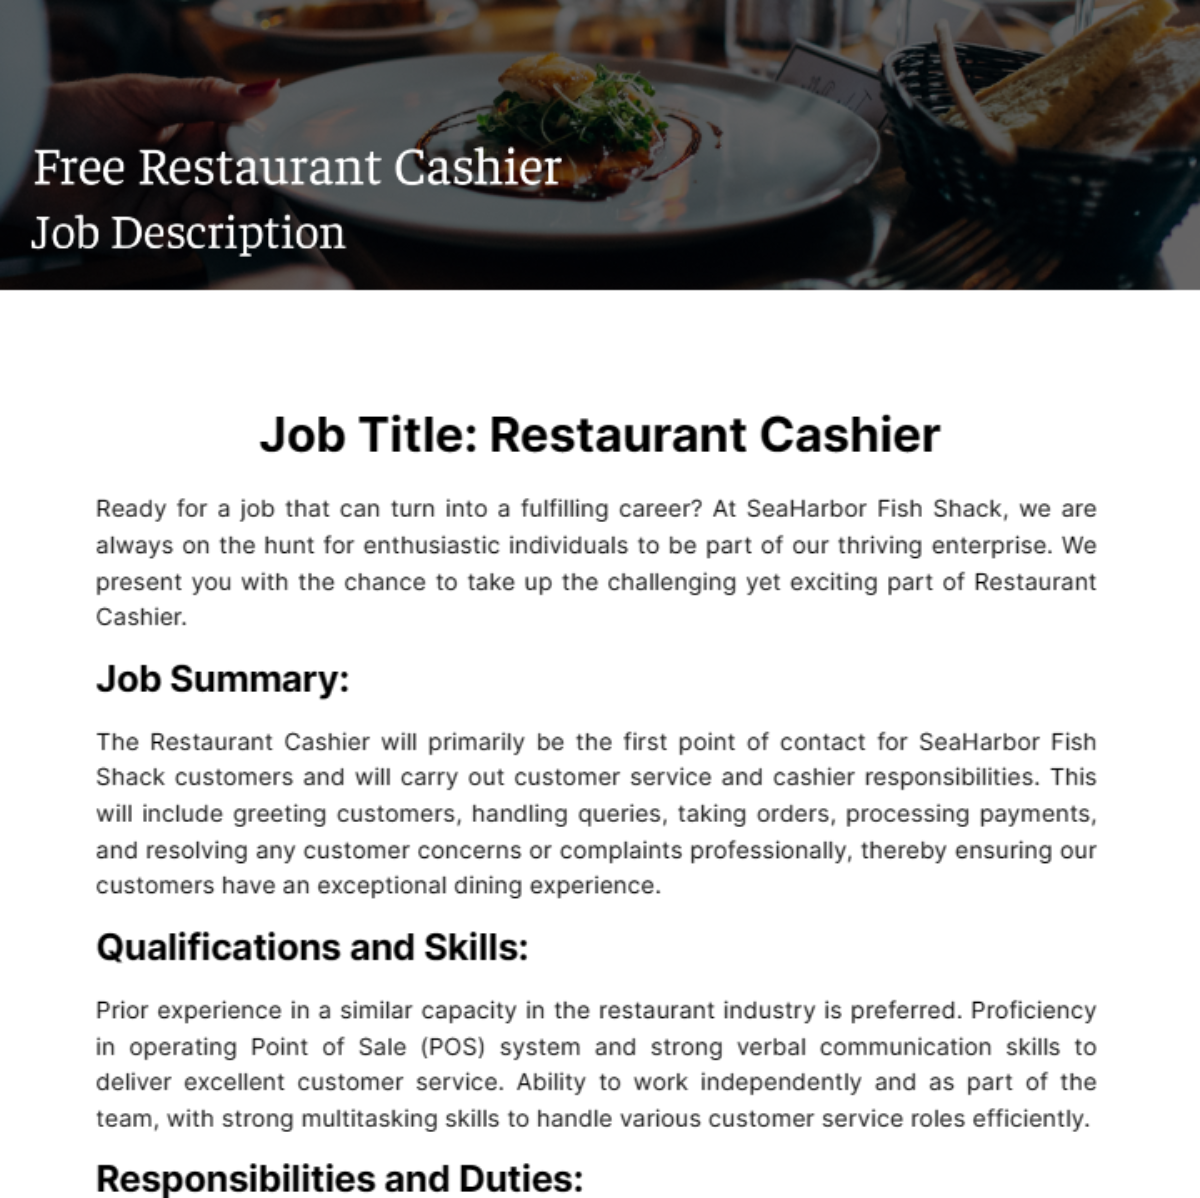 Free Restaurant Cashier Job Description Template